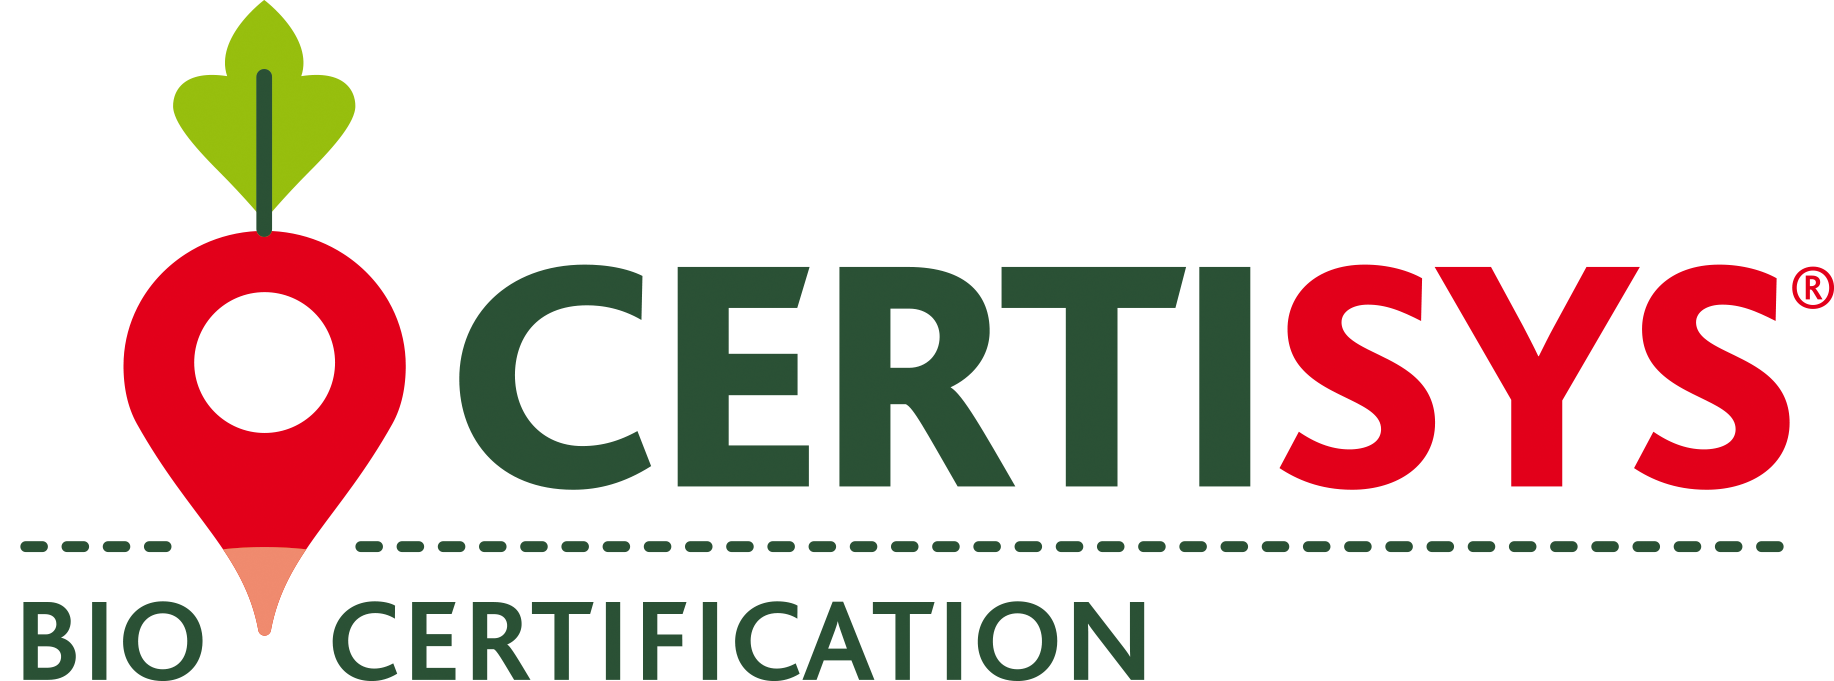 Certisys Bio Certification